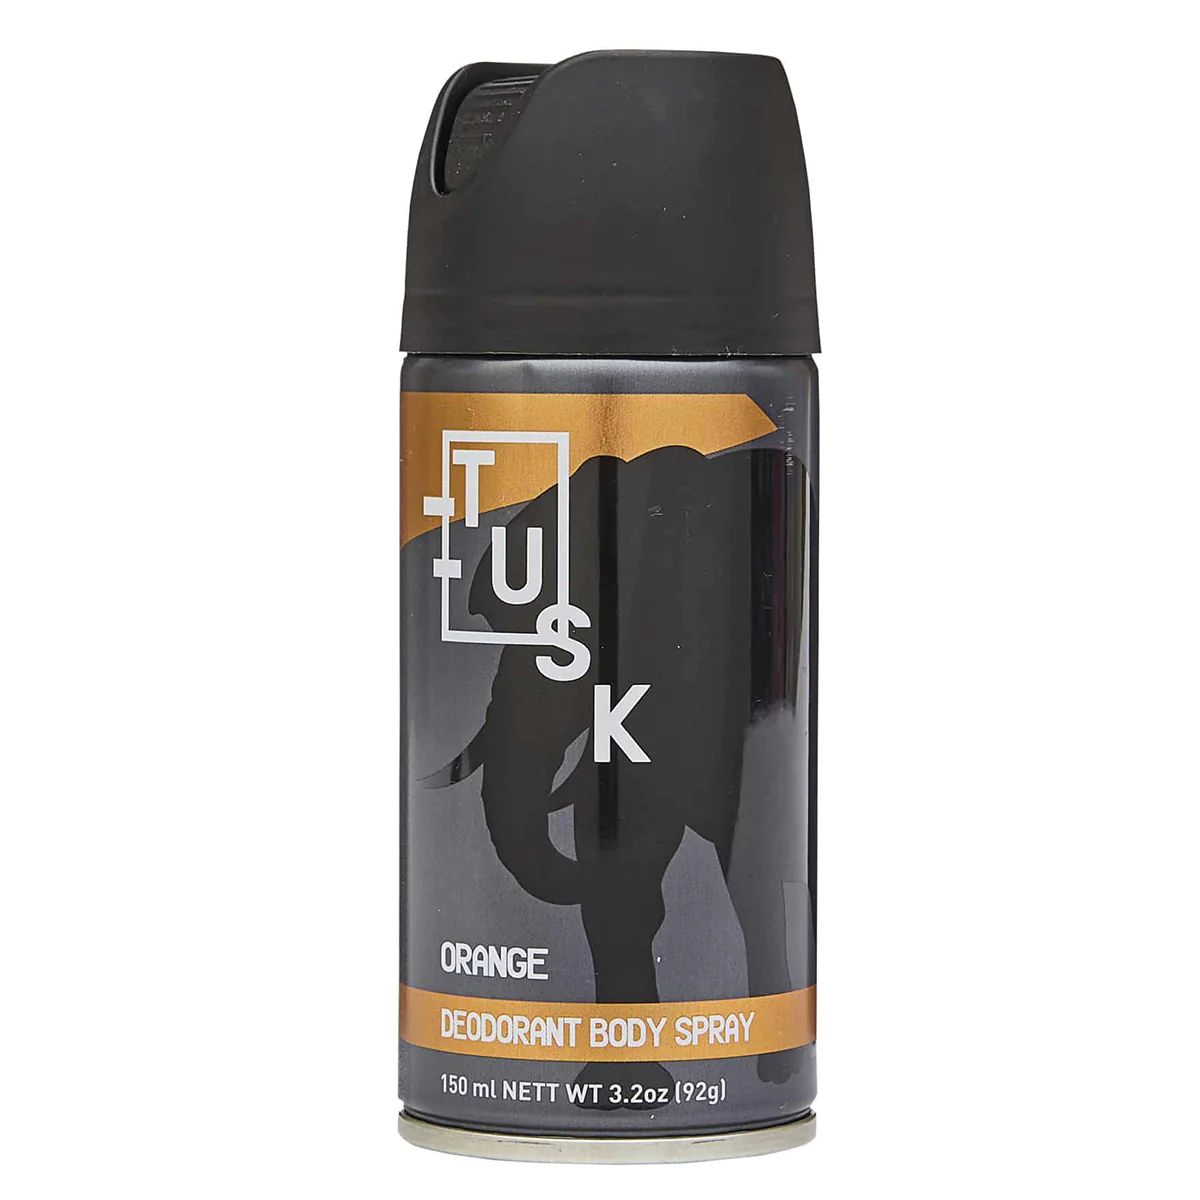 Tusk - Orange Deodorant Body Spray - 150ml bottle with "tusk" branding, isolated on a white background.